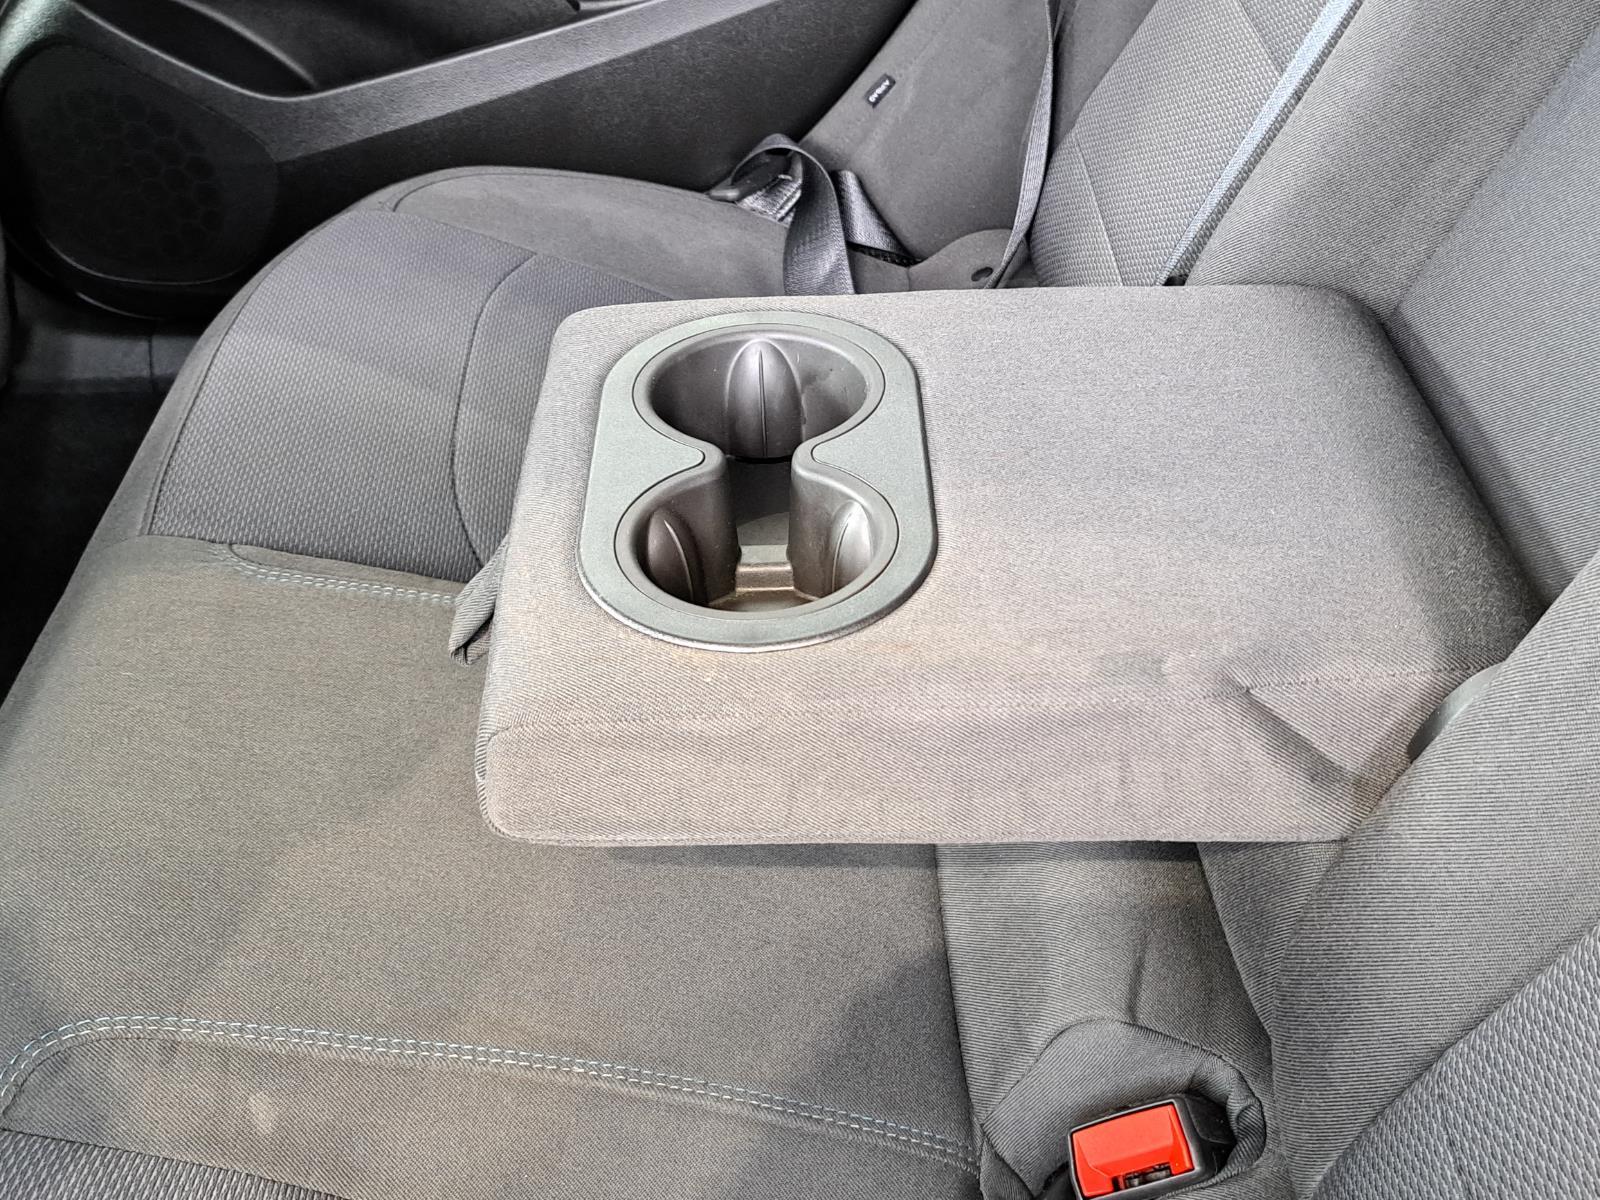 2019 Chevrolet Cruze LT Hatchback 4 Dr. Front Wheel Drive mobile thumbnail 30